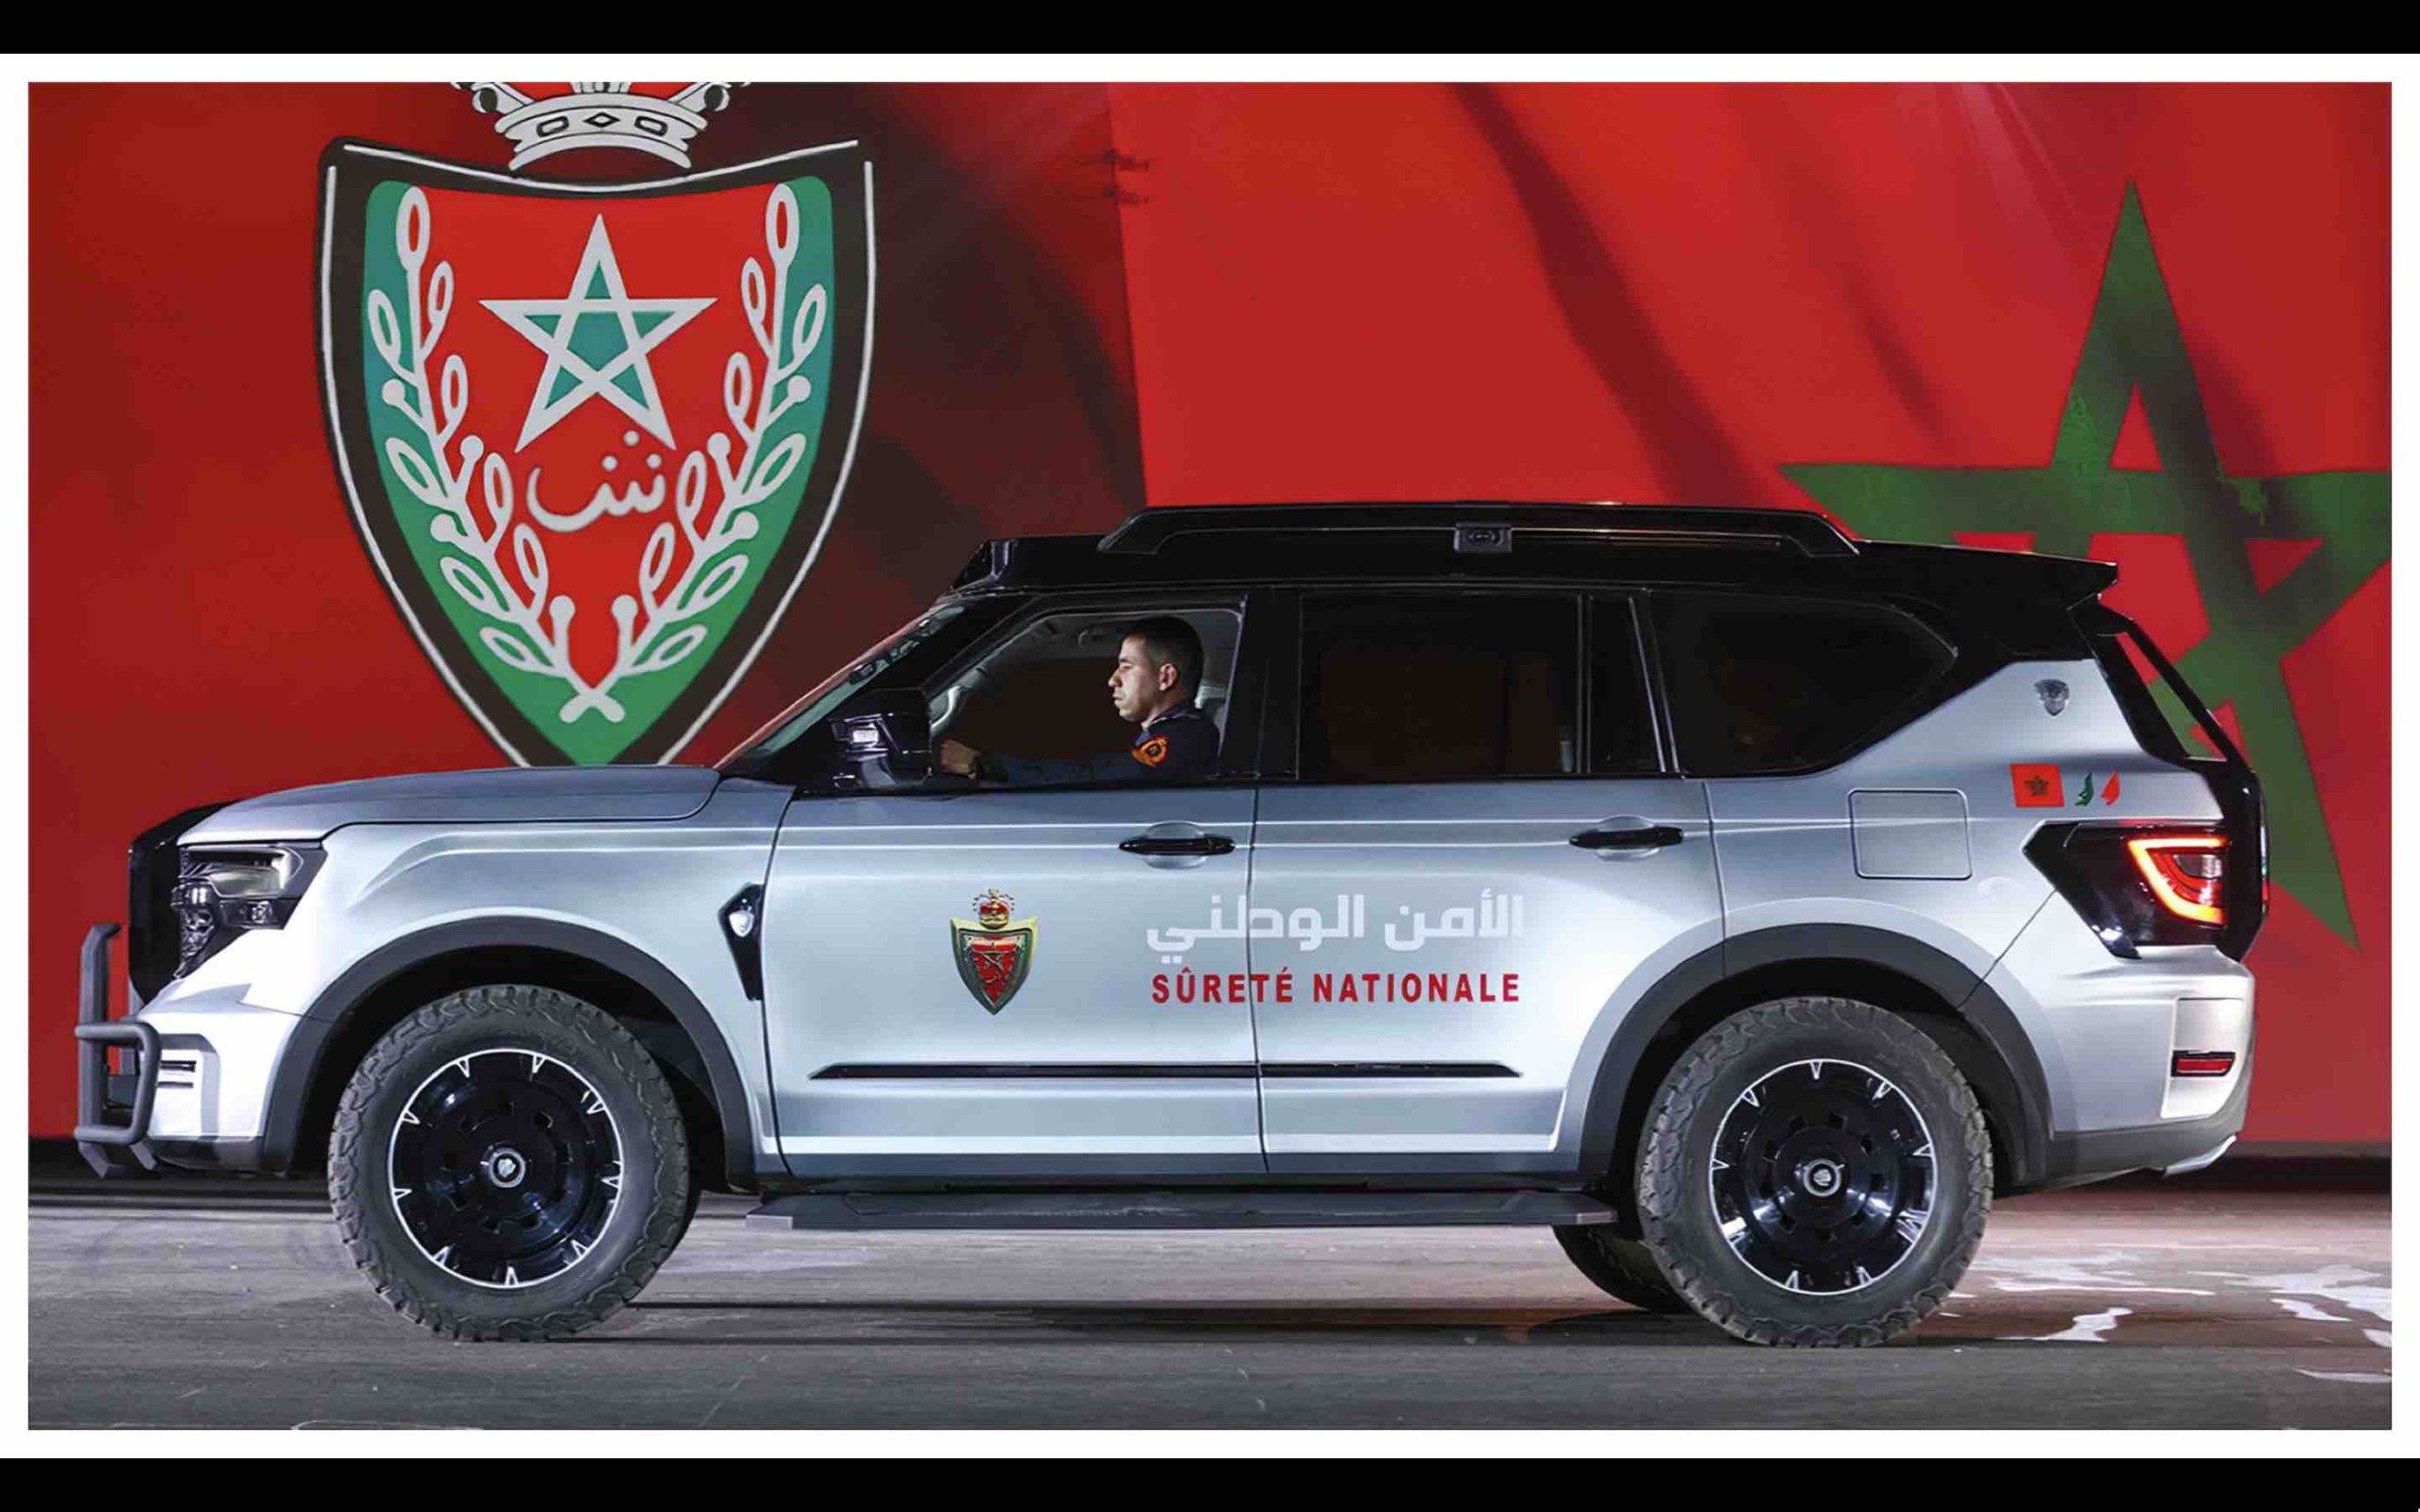 Ghiath Smart Patrol Maroc DGSN Morocco voiture police marocaine